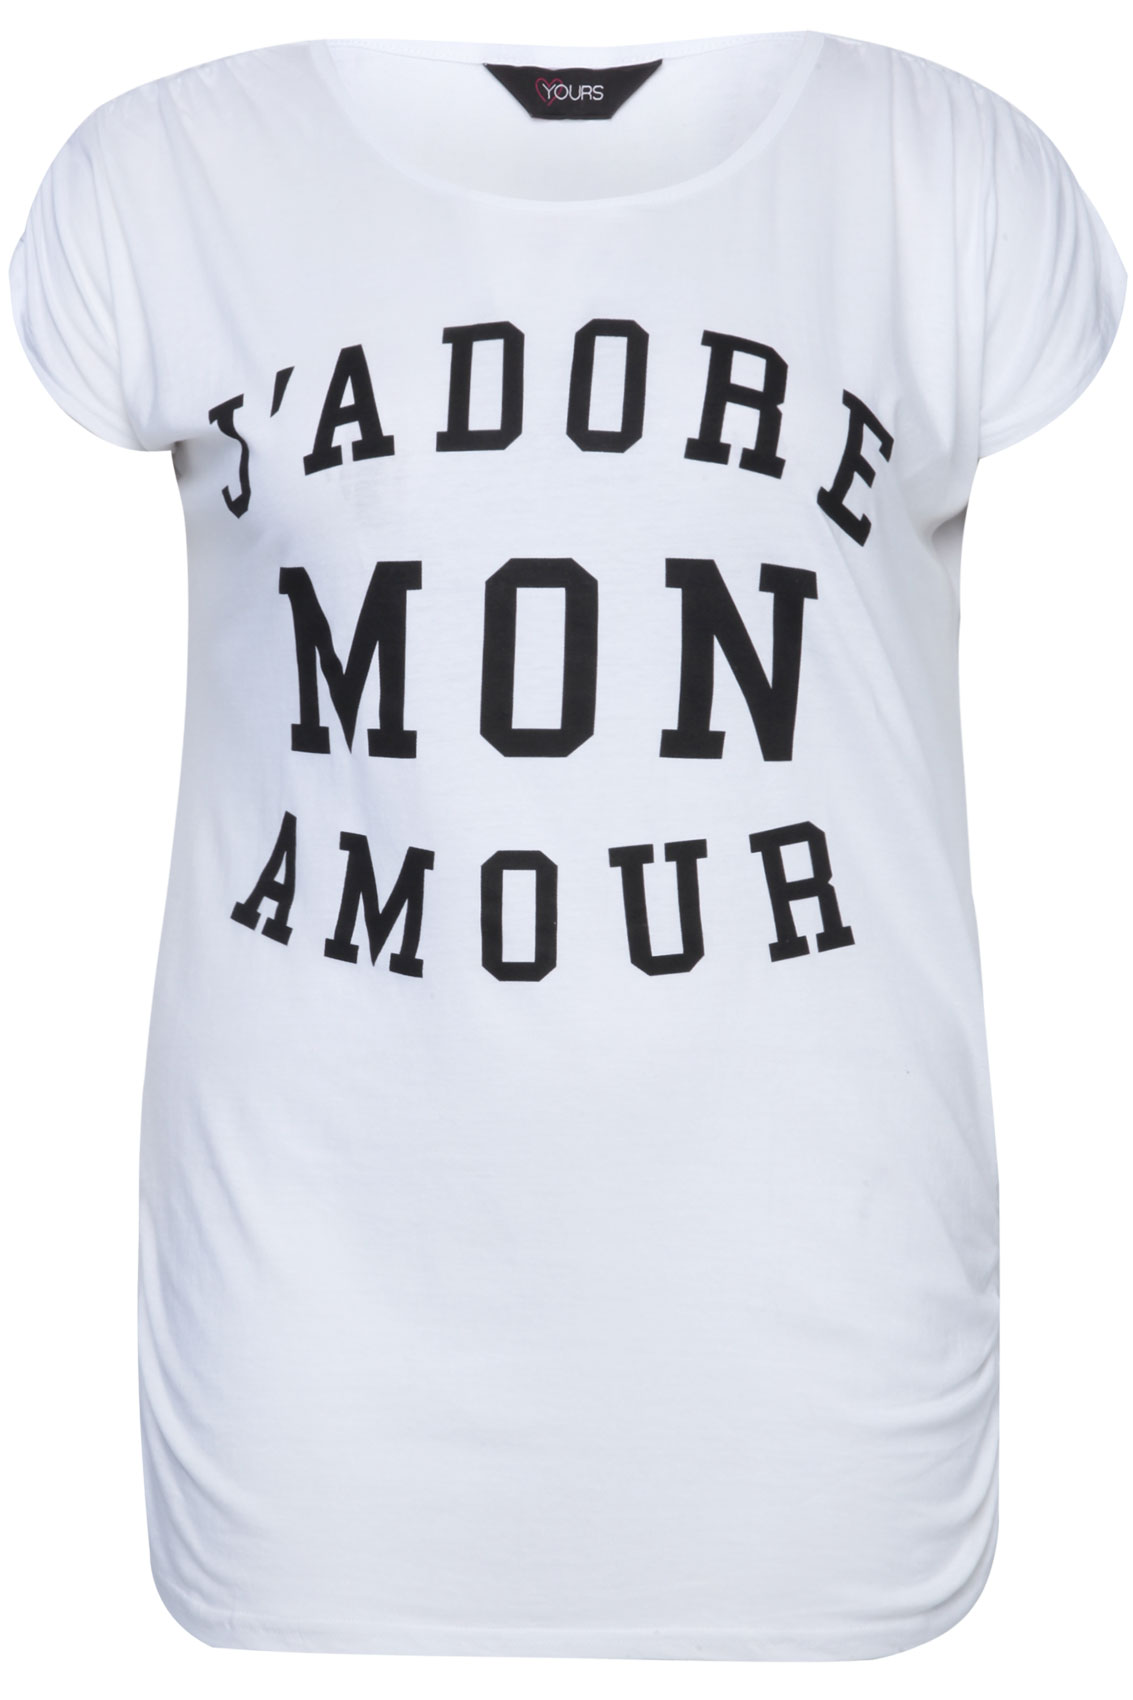 White JAdore Mon Amour Slogan Print Cotton T-Shirt plus 